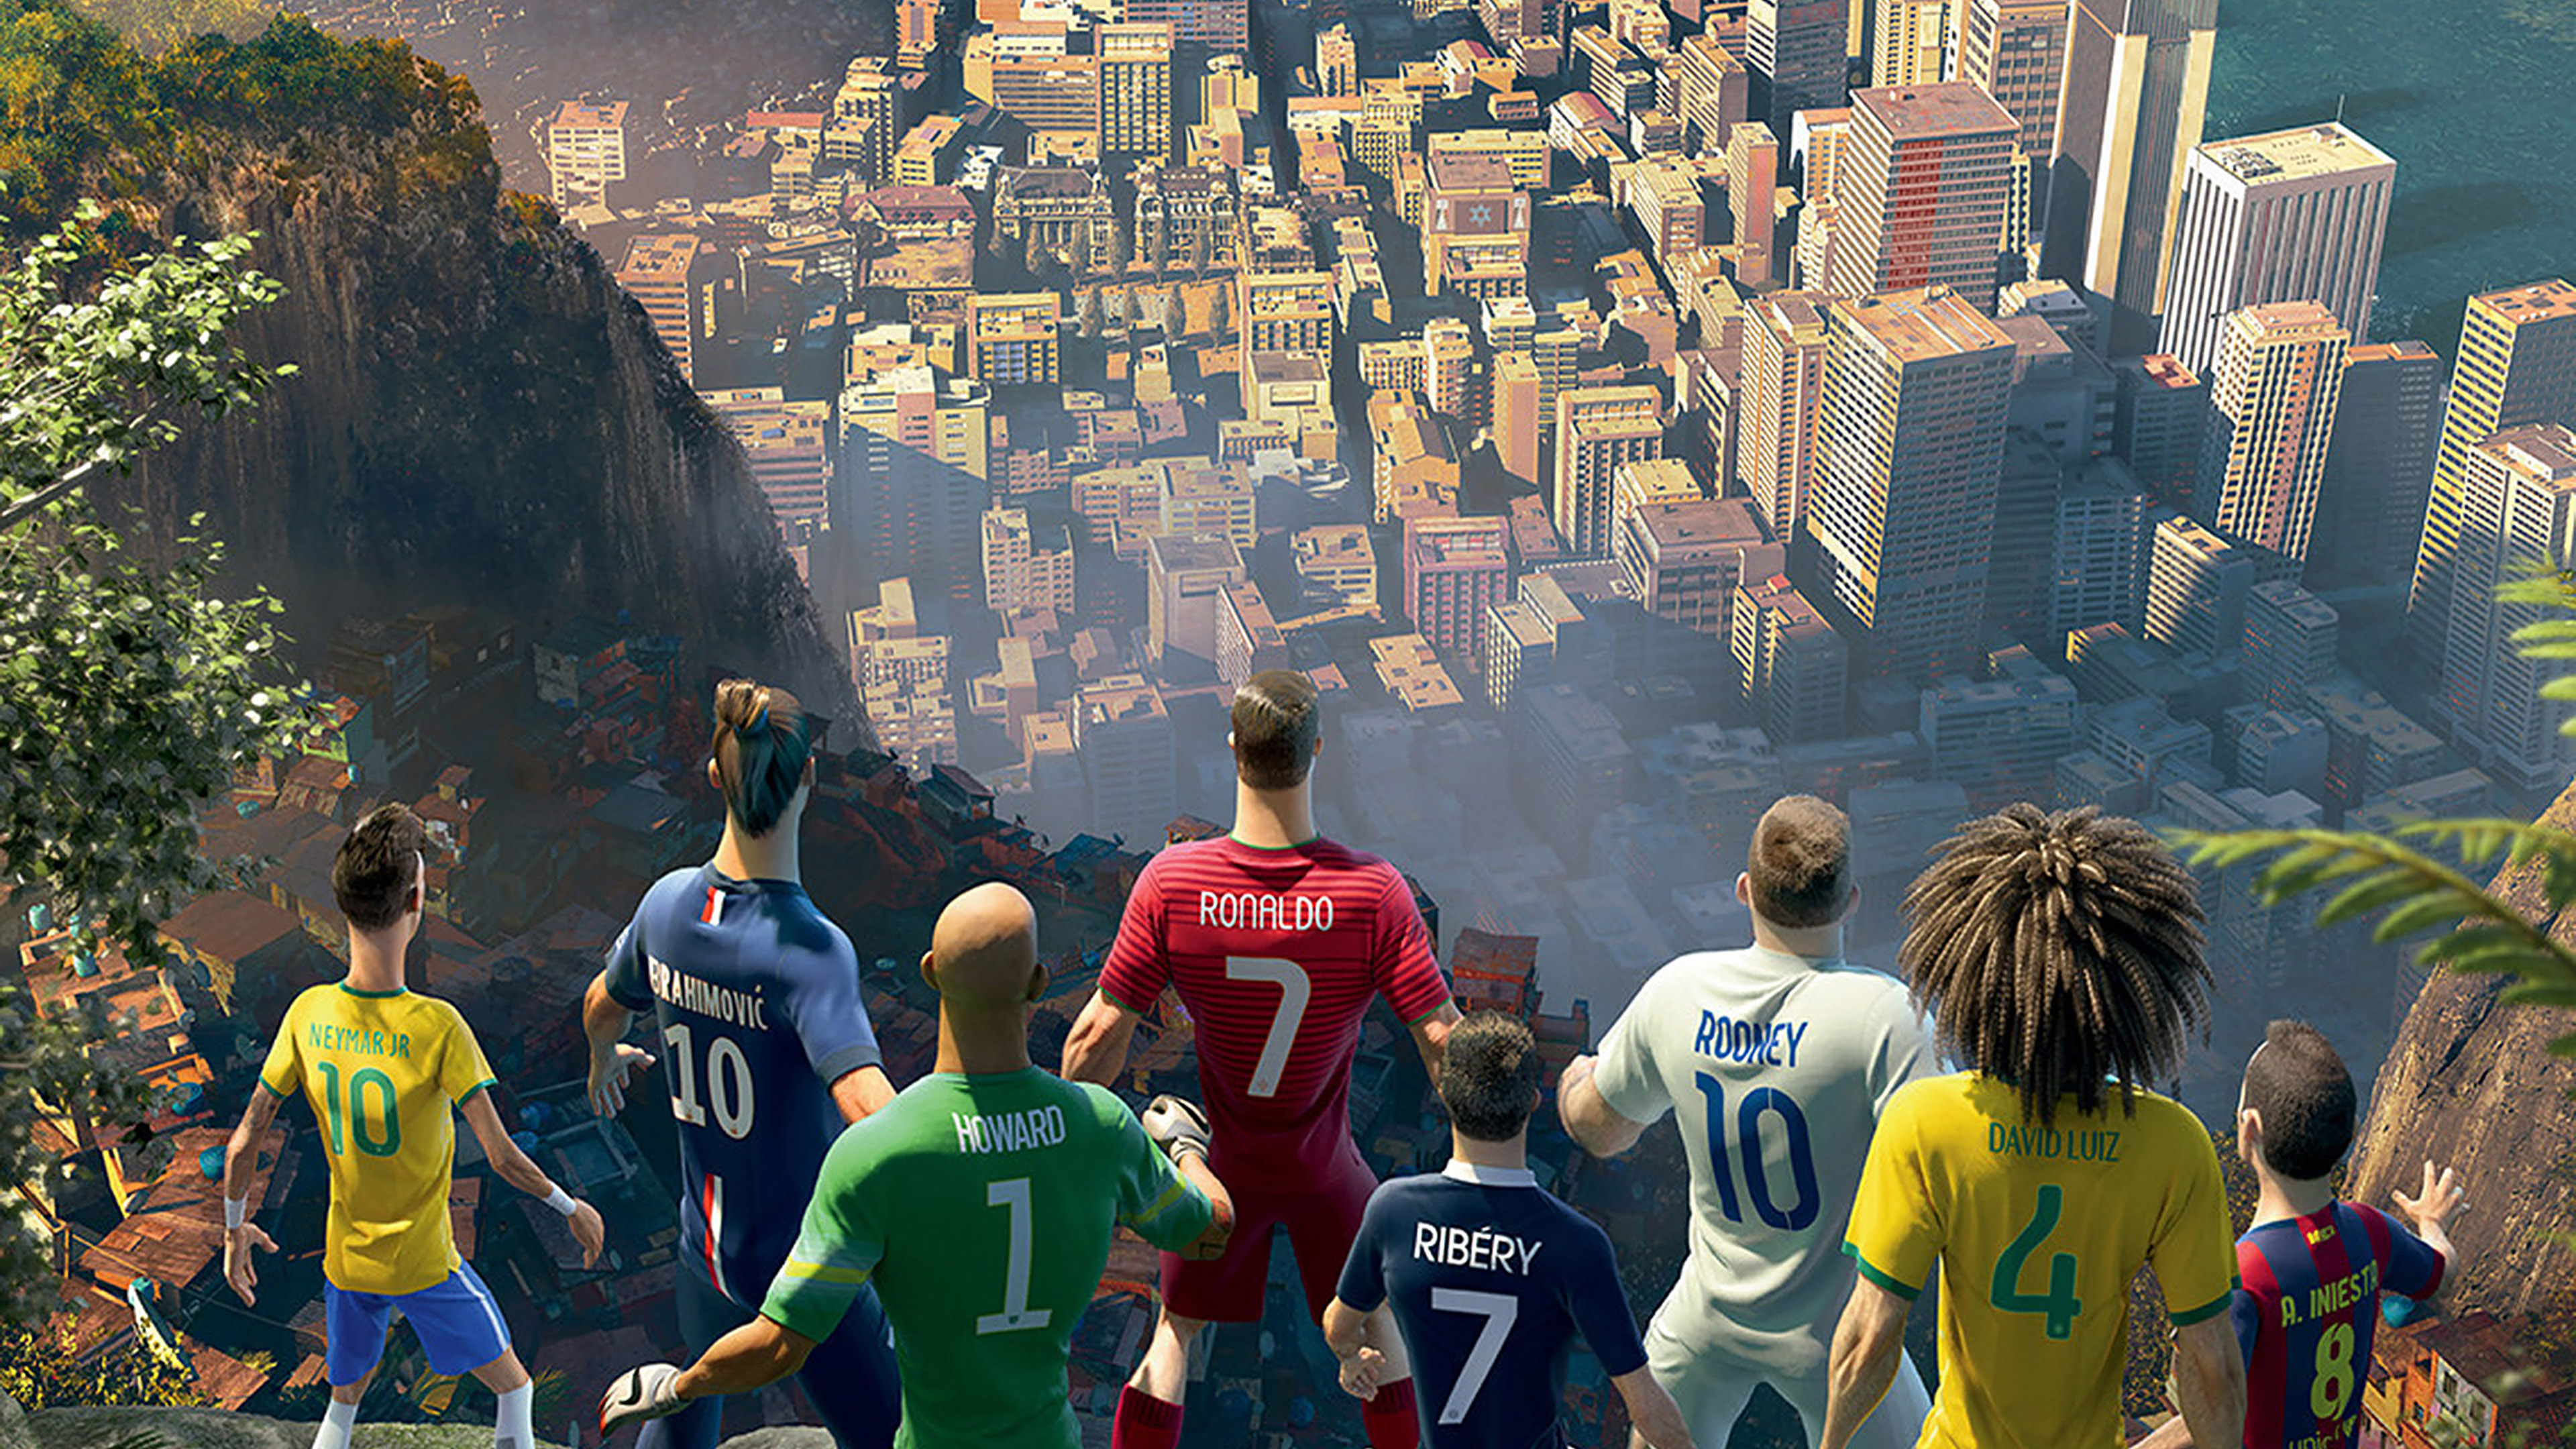 Hd Nike Football The Last Game - HD Wallpaper 